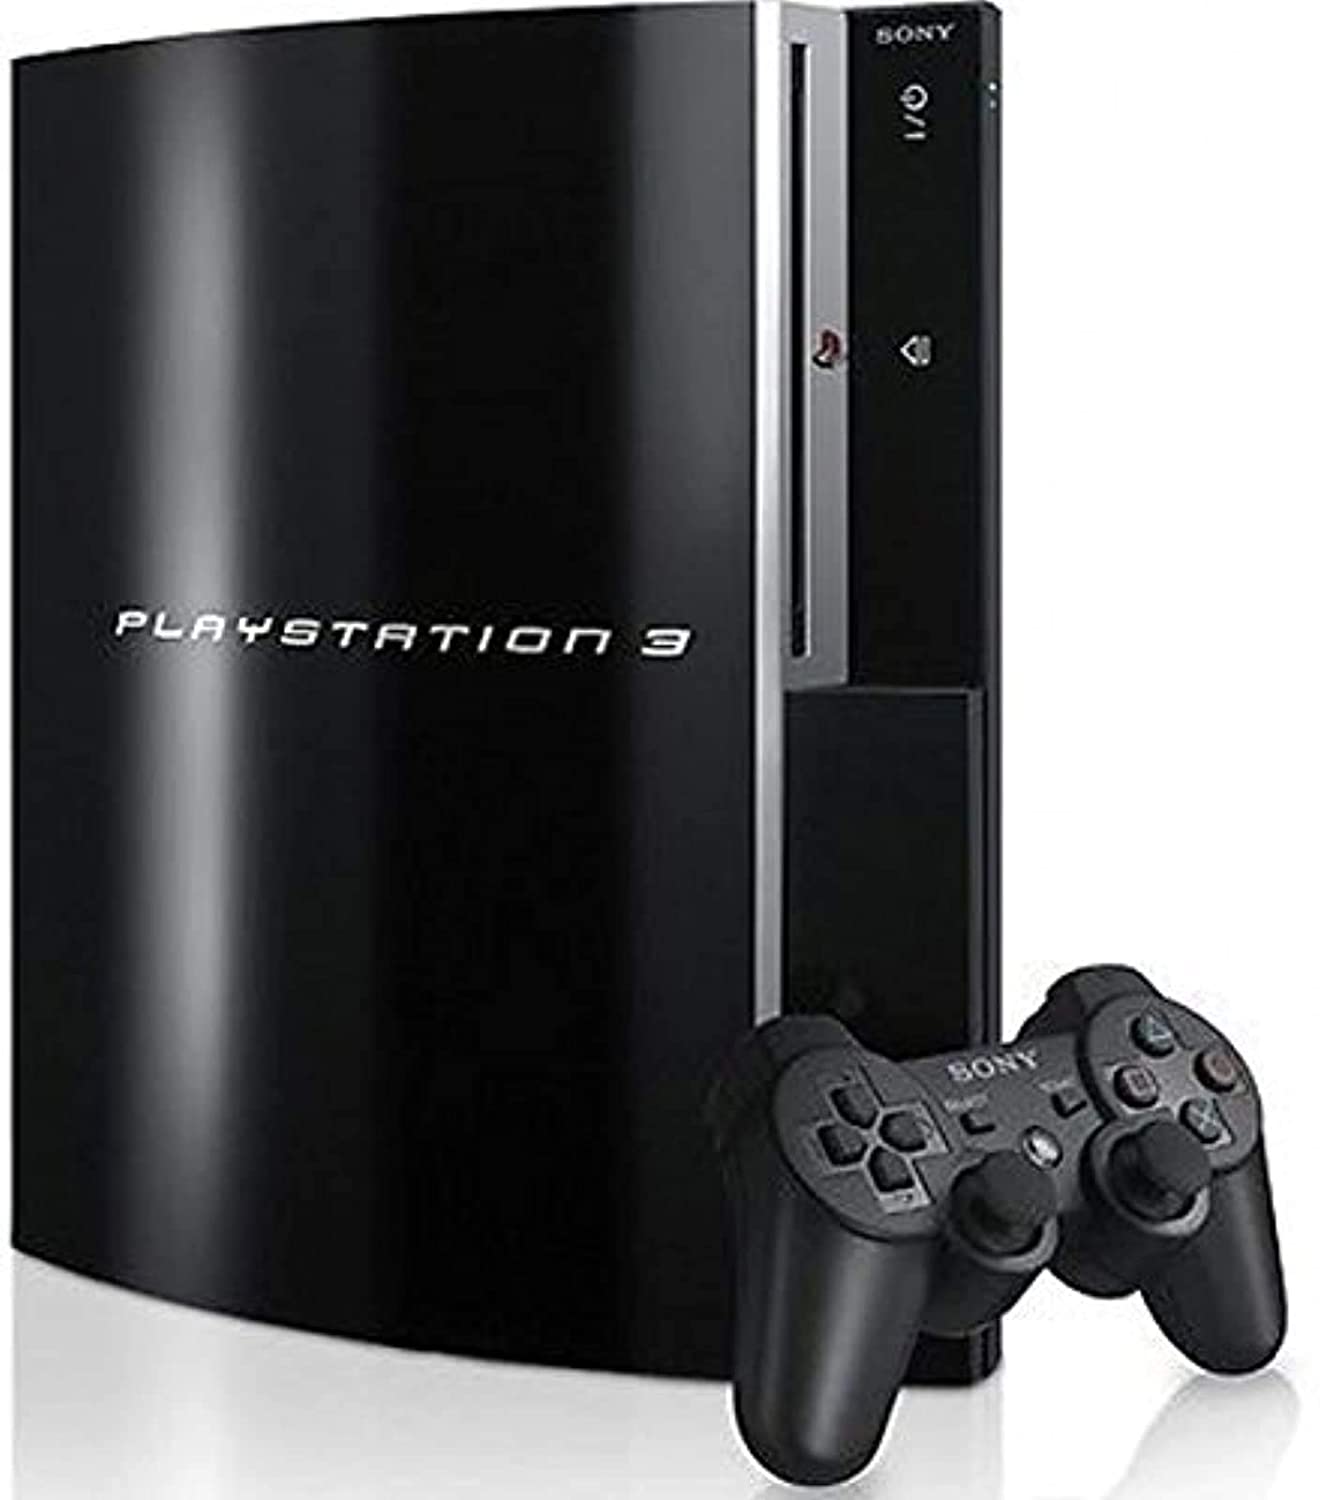 Playstation 3 System 320GB Backwards Compatible CECHA01 (Playstation 3)